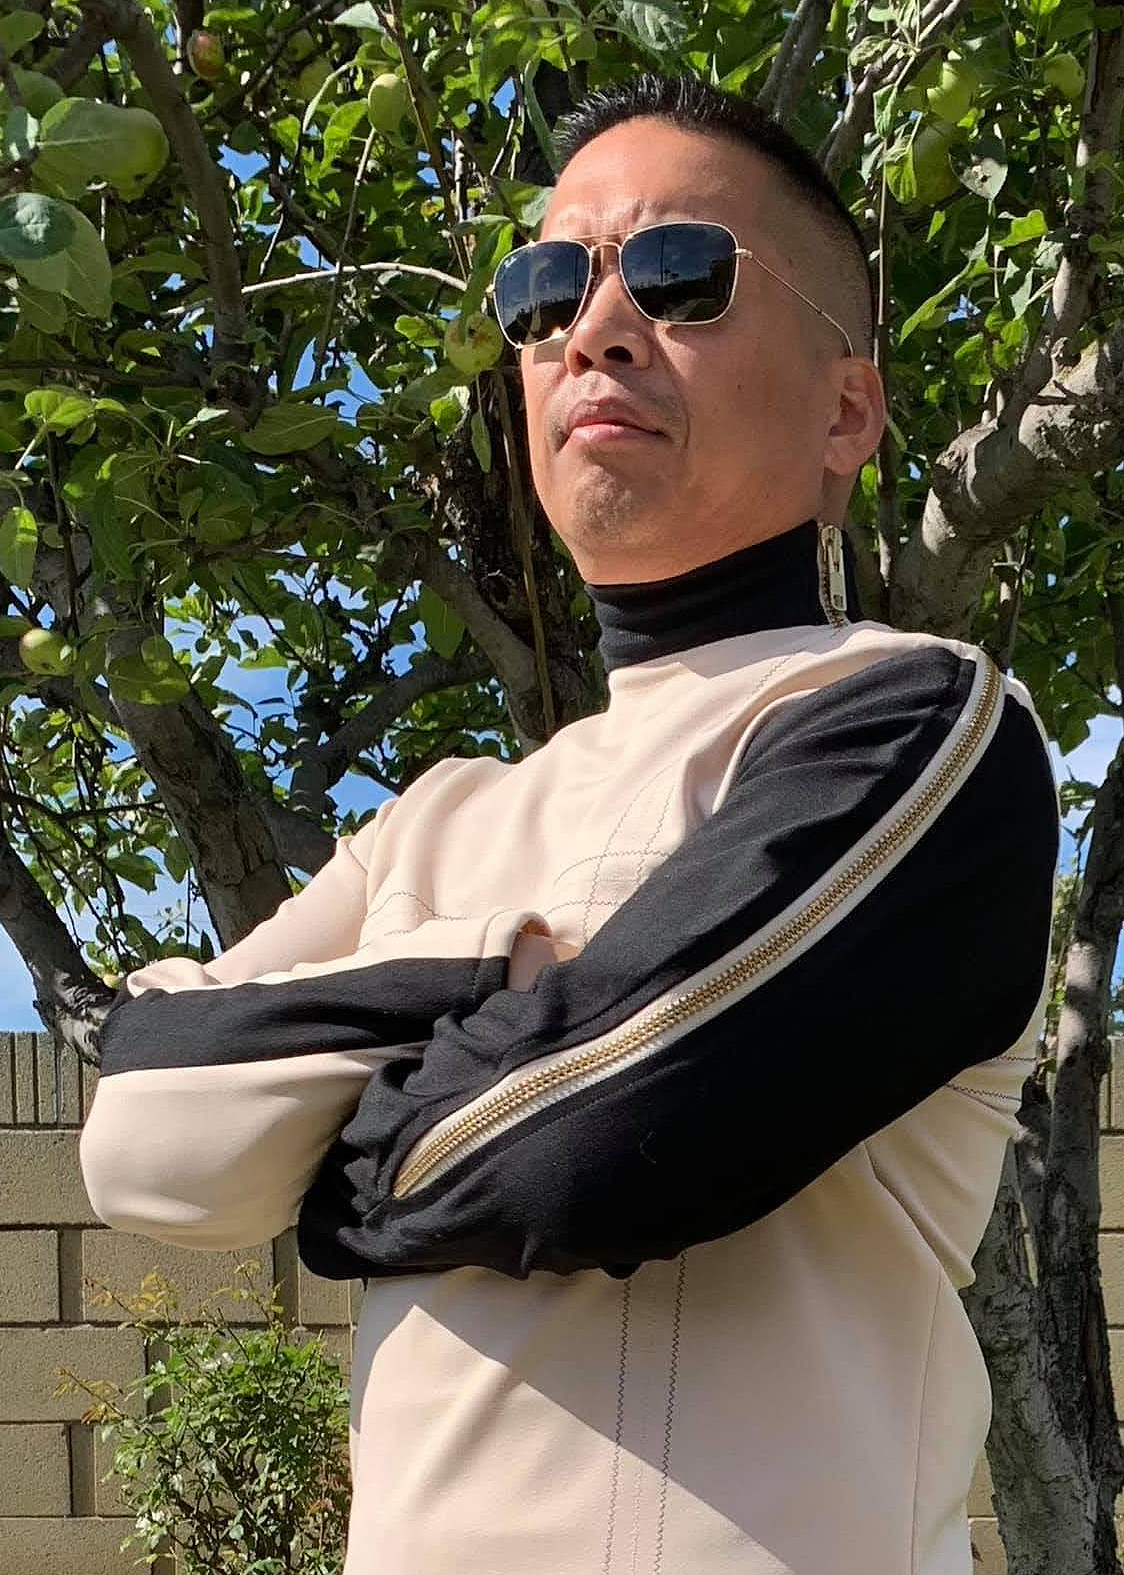 Norman Lao wearing a Space: 1999 uniform